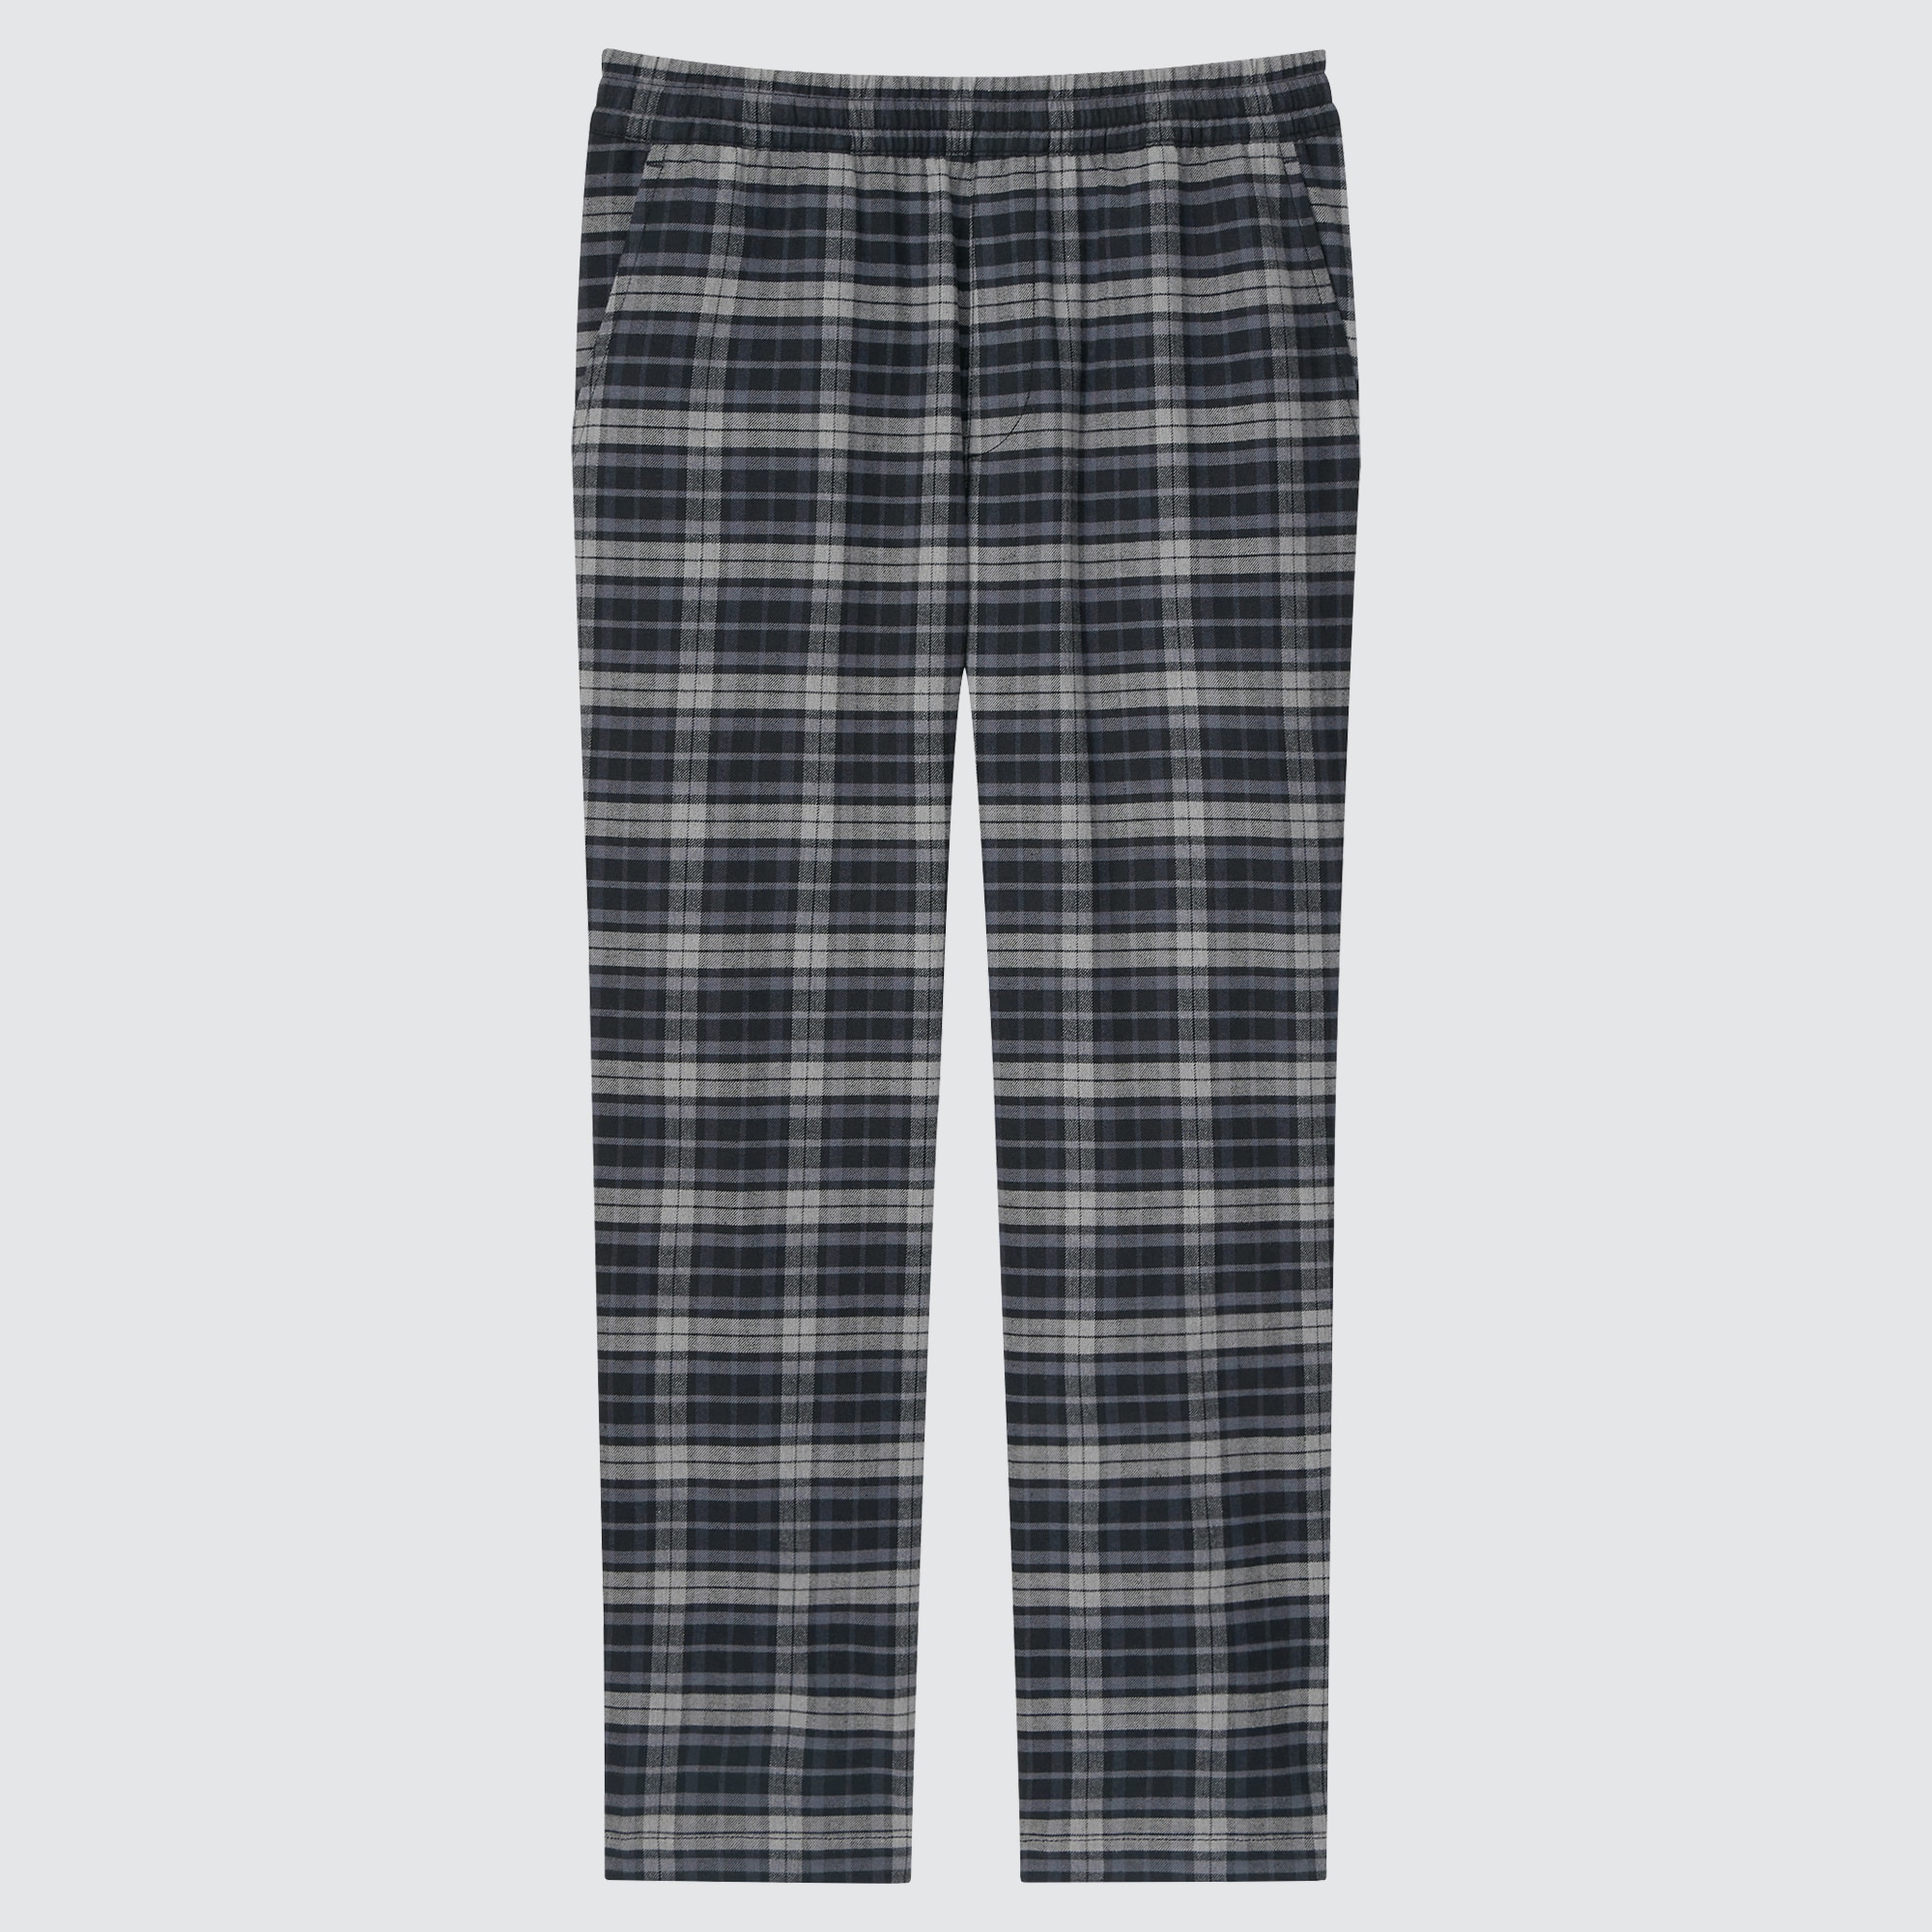 Men's Slim Fit Stretch Plaid Pants Flannel Jogger Pajama Lounge